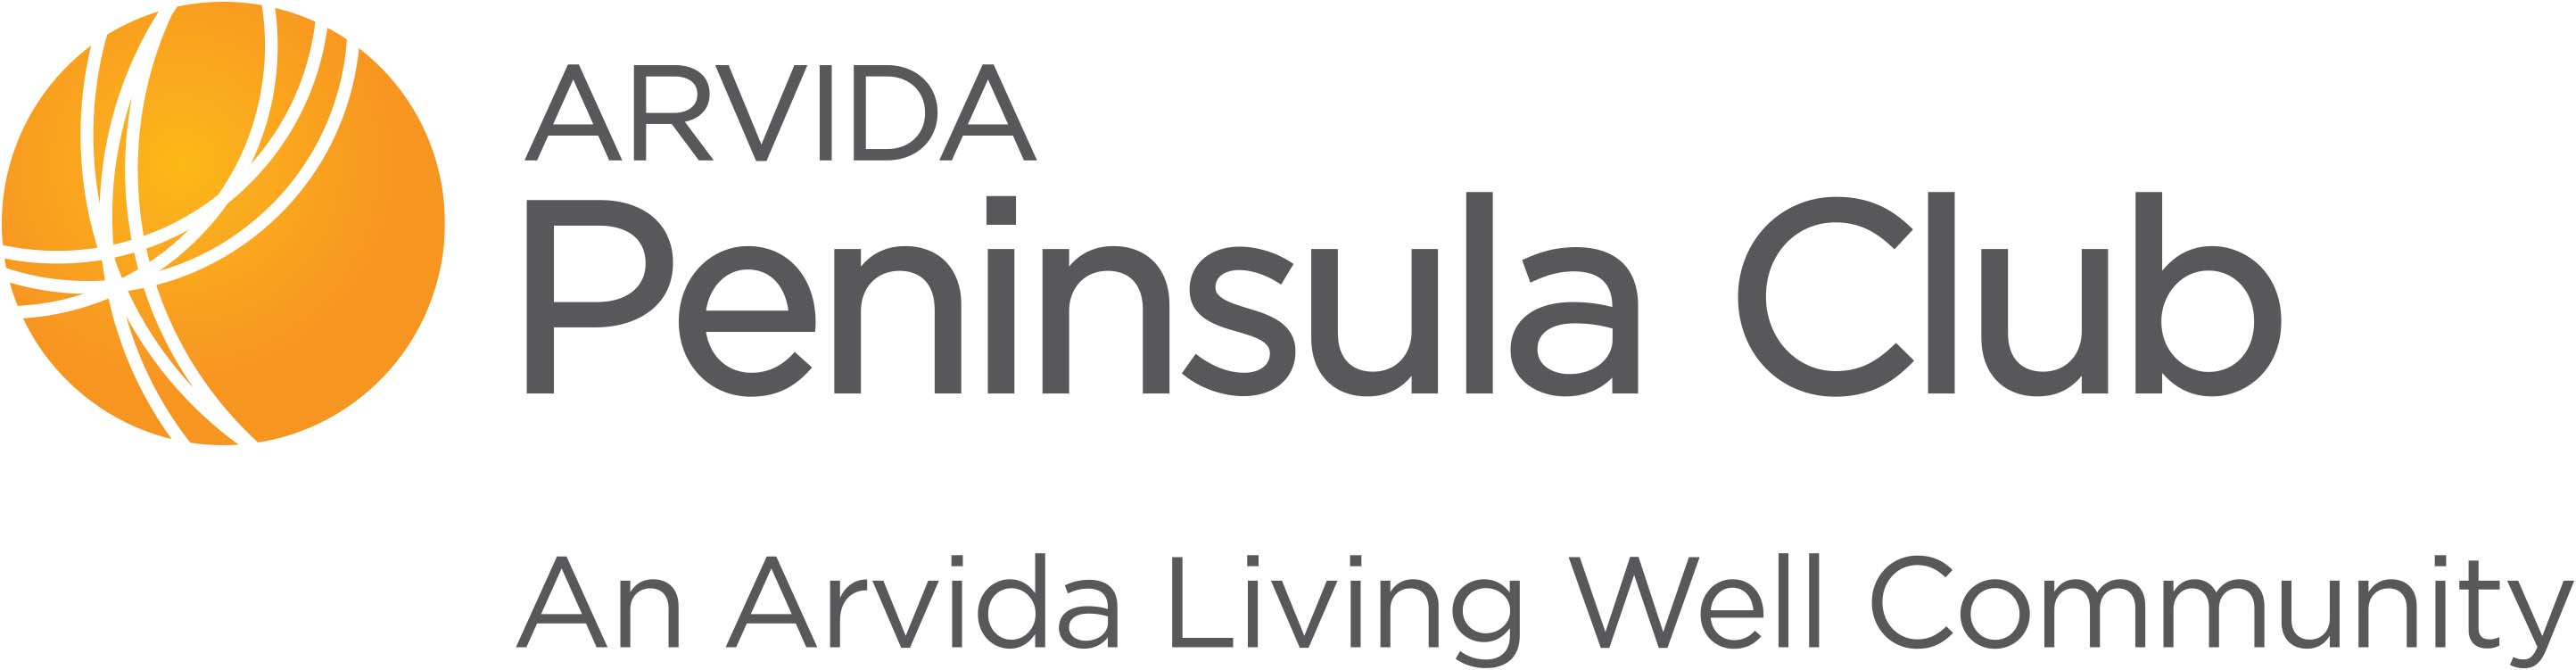 Peninsula Club | Arvida logo